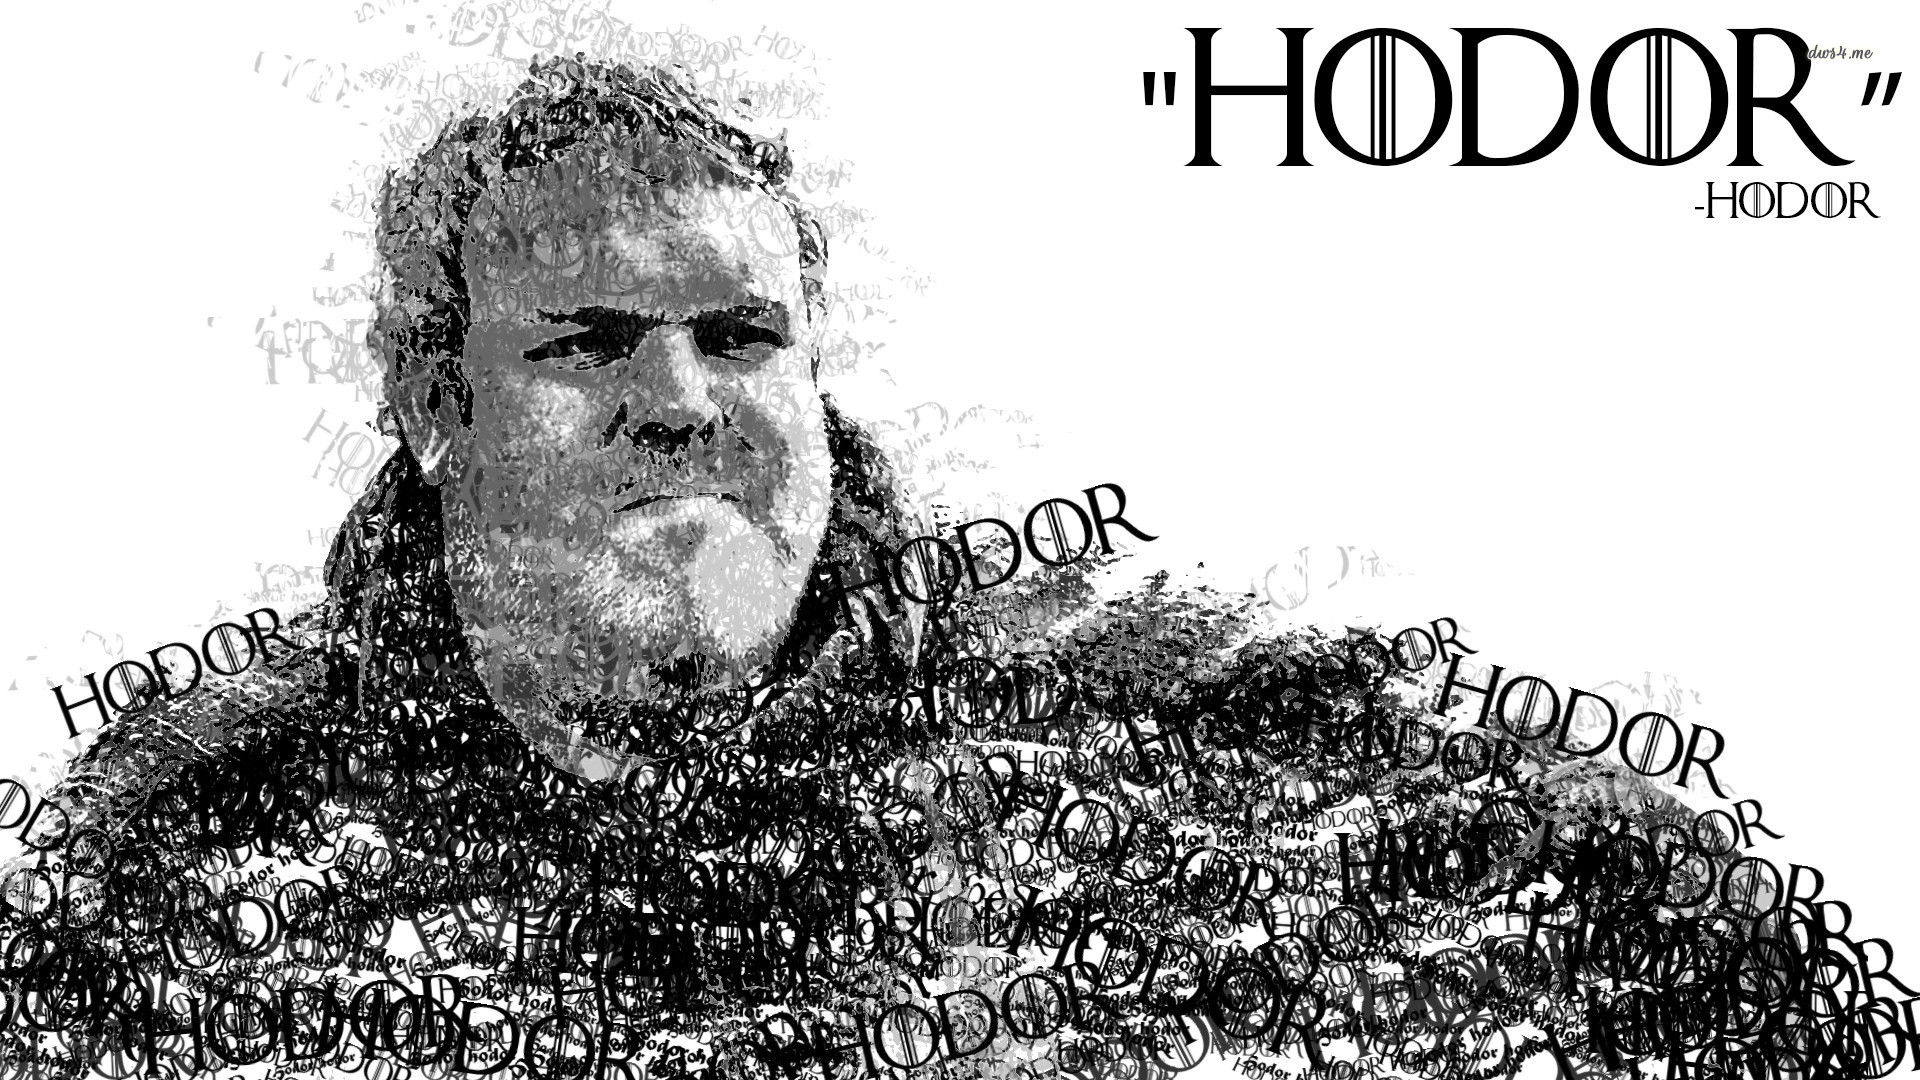 Game Of Thrones Quotes Hodor - HD Wallpaper 